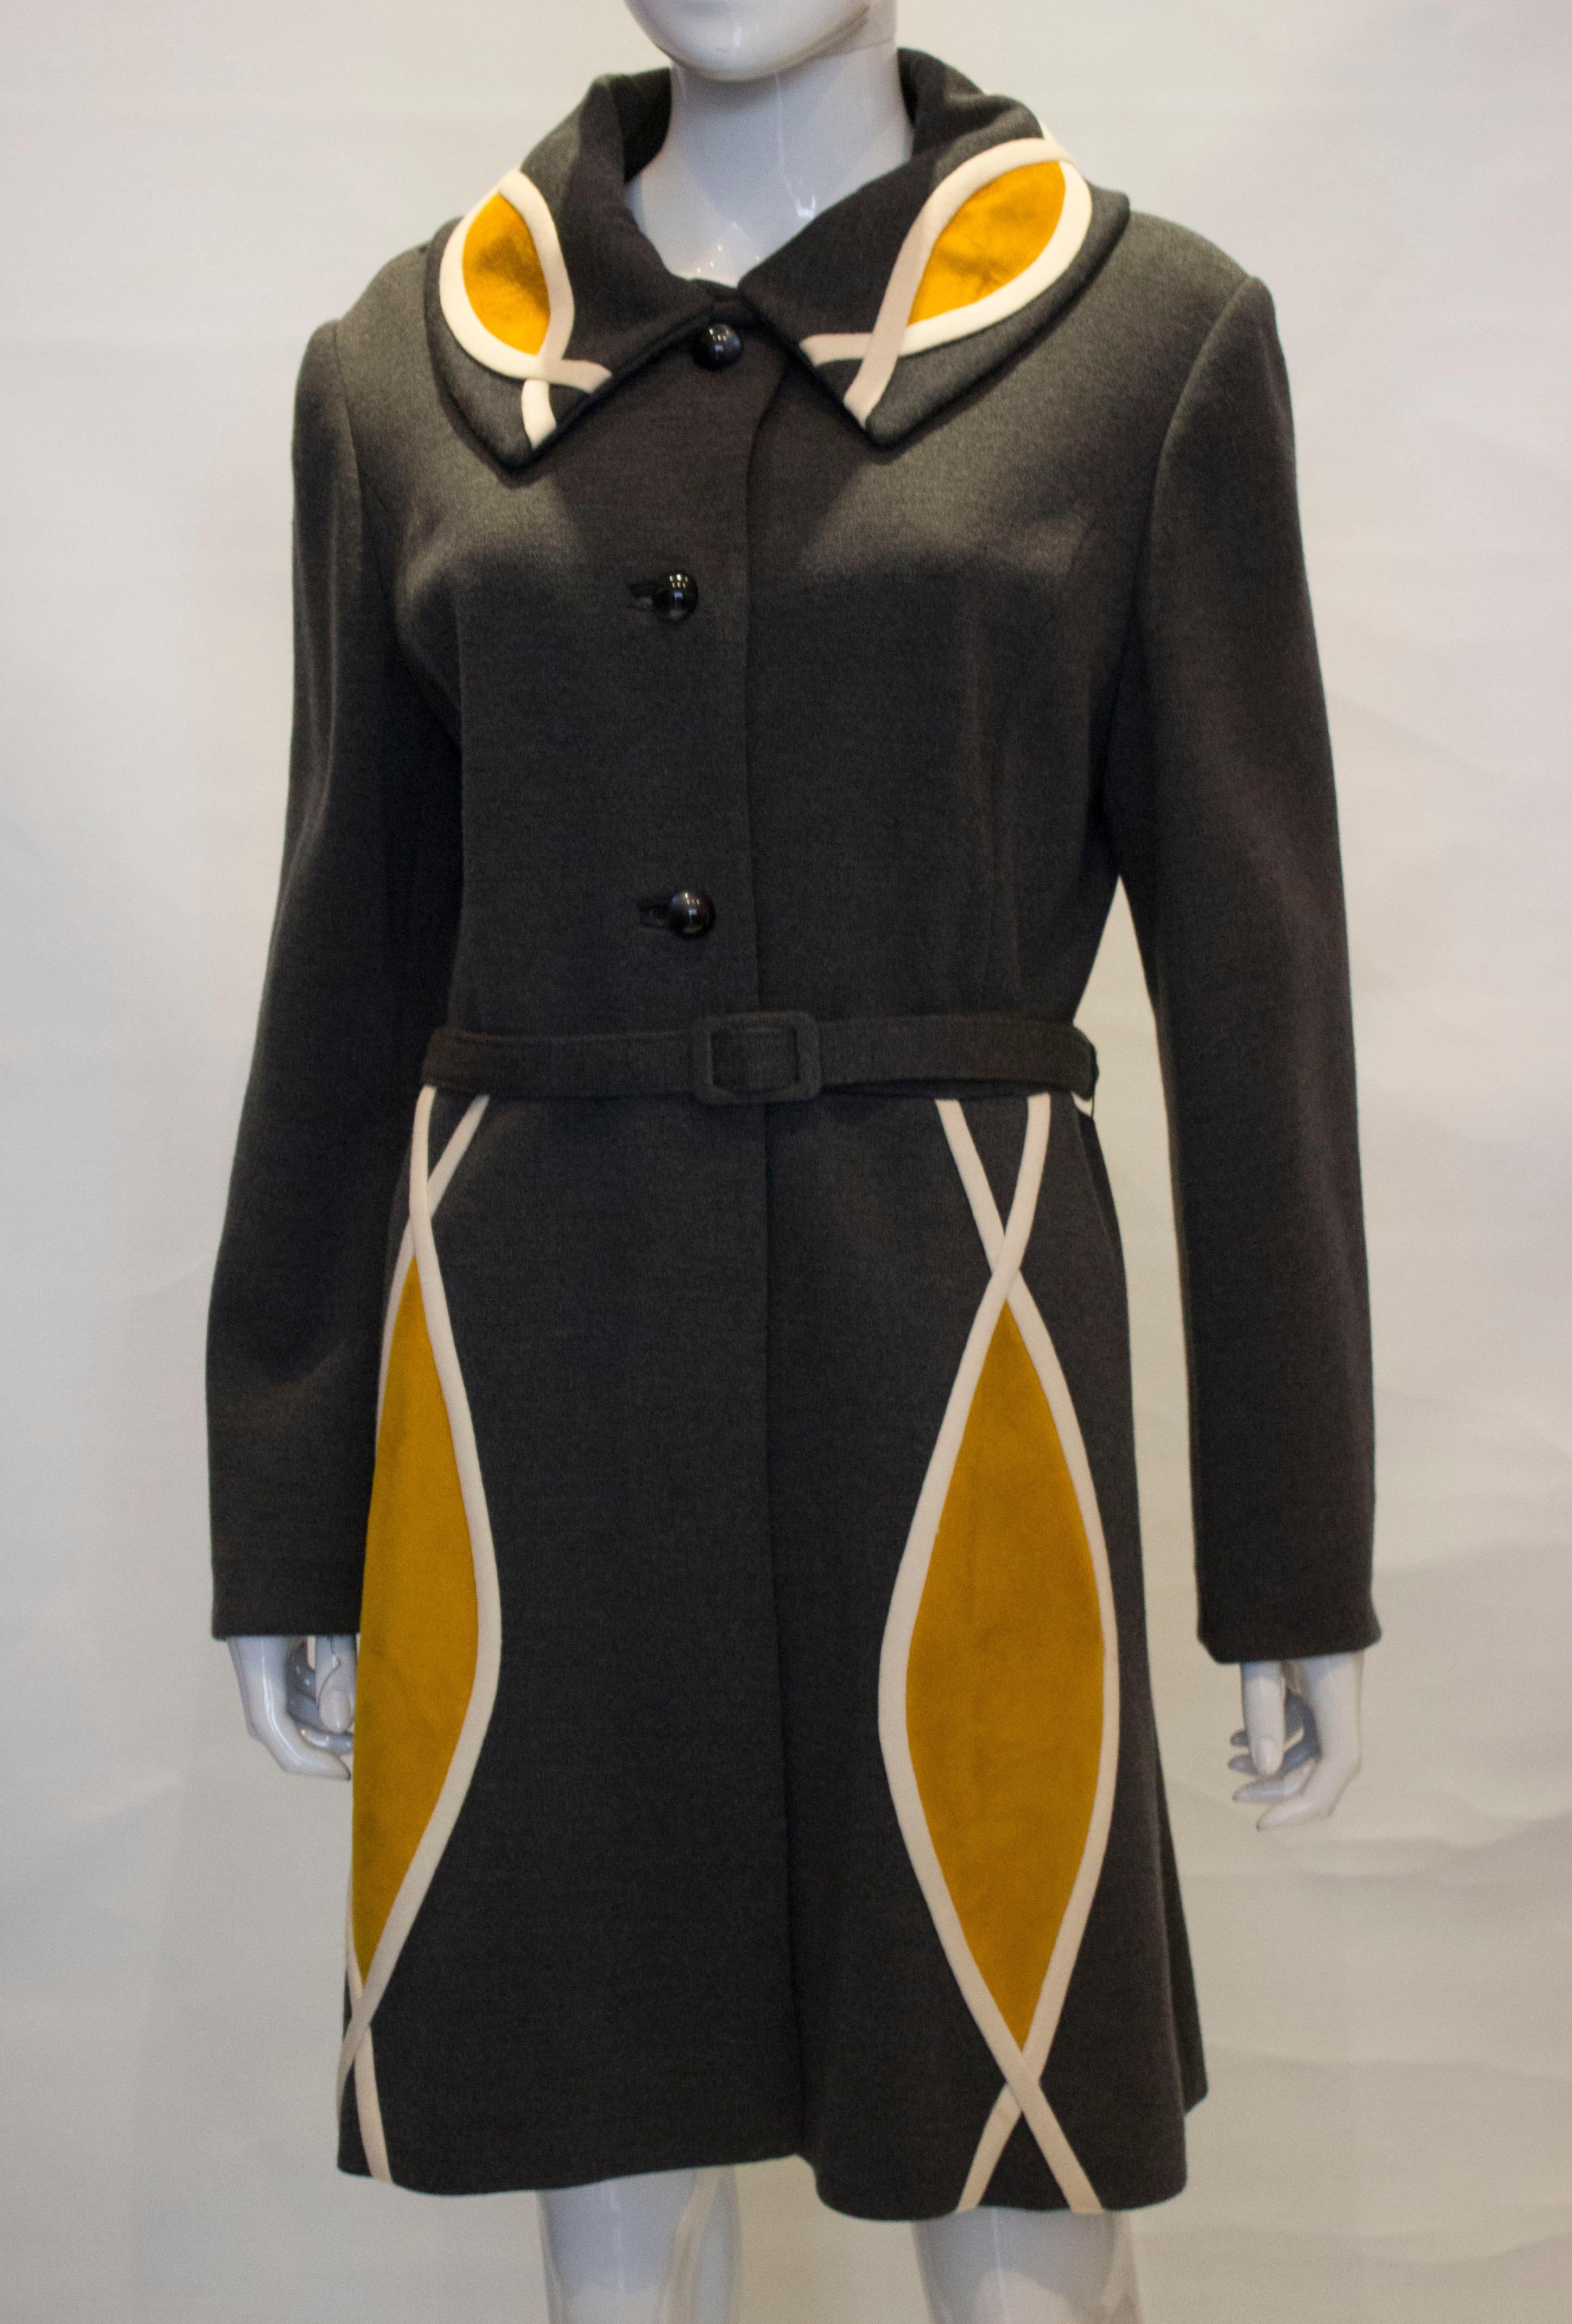 Vintage Lilli Ann Knit Jersey Dress and Matching Coat 5